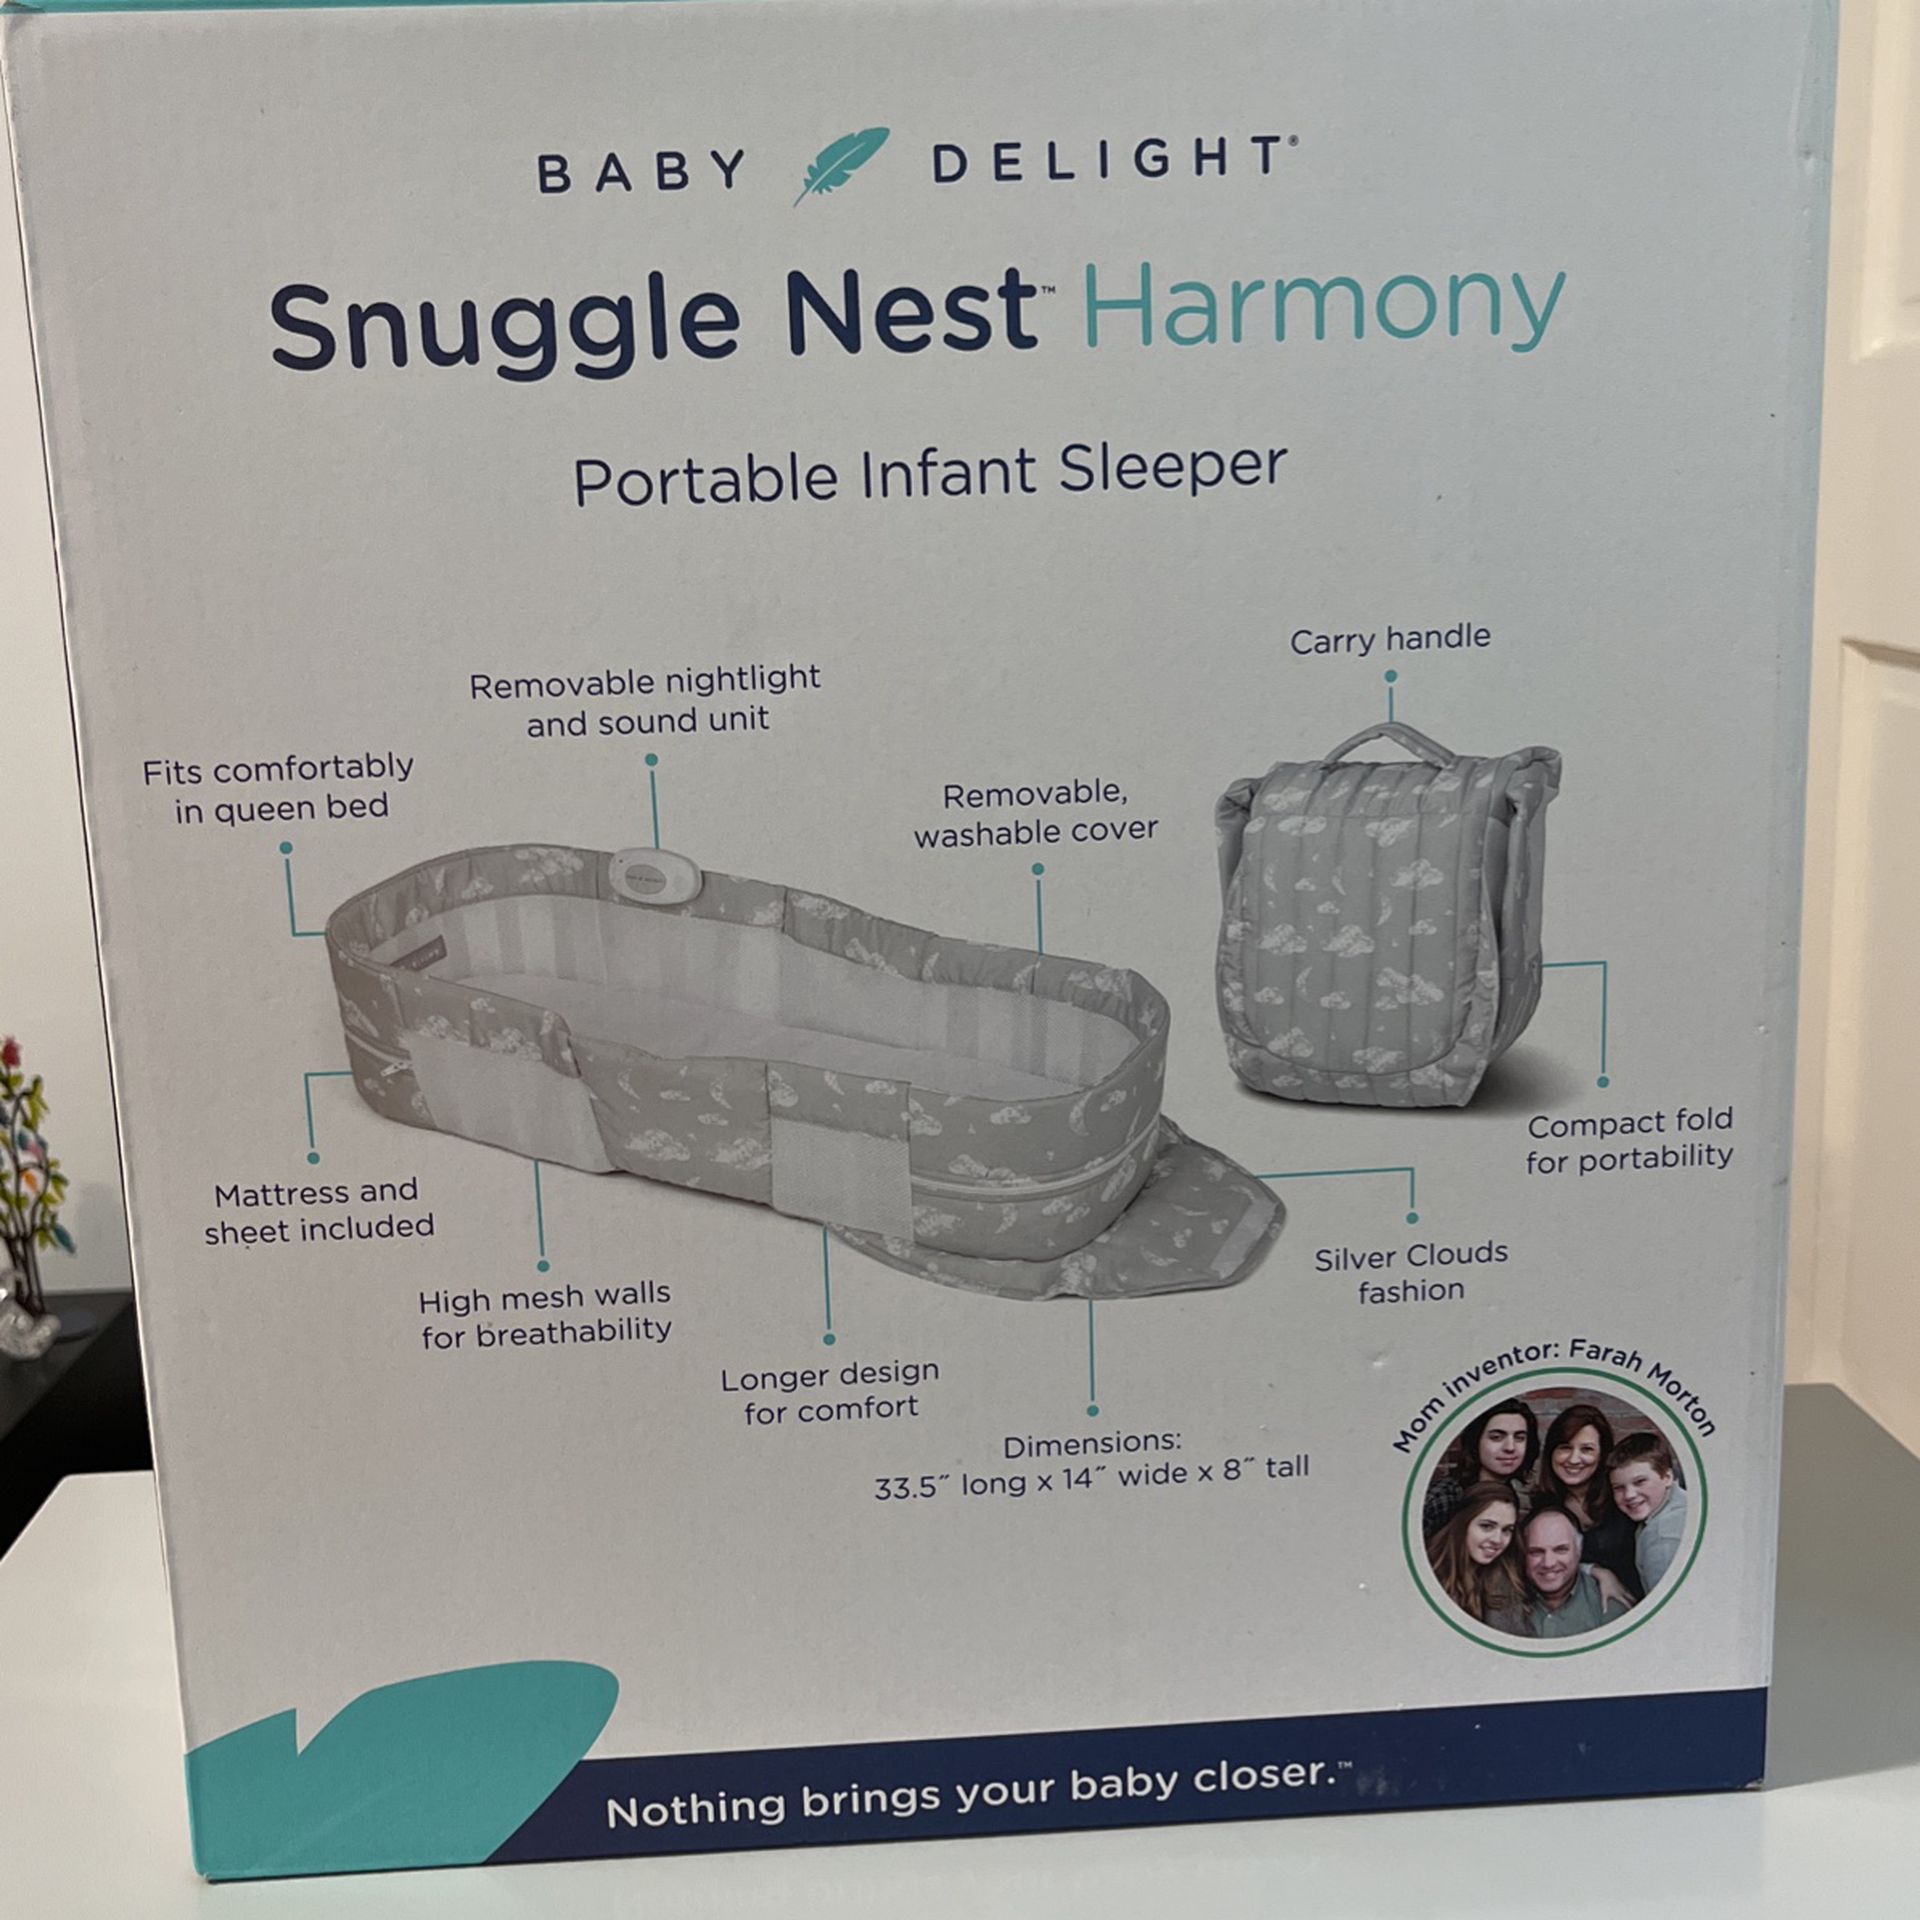 Baby Delight Snuggle Nest Harmony Portable Infant Sleeper